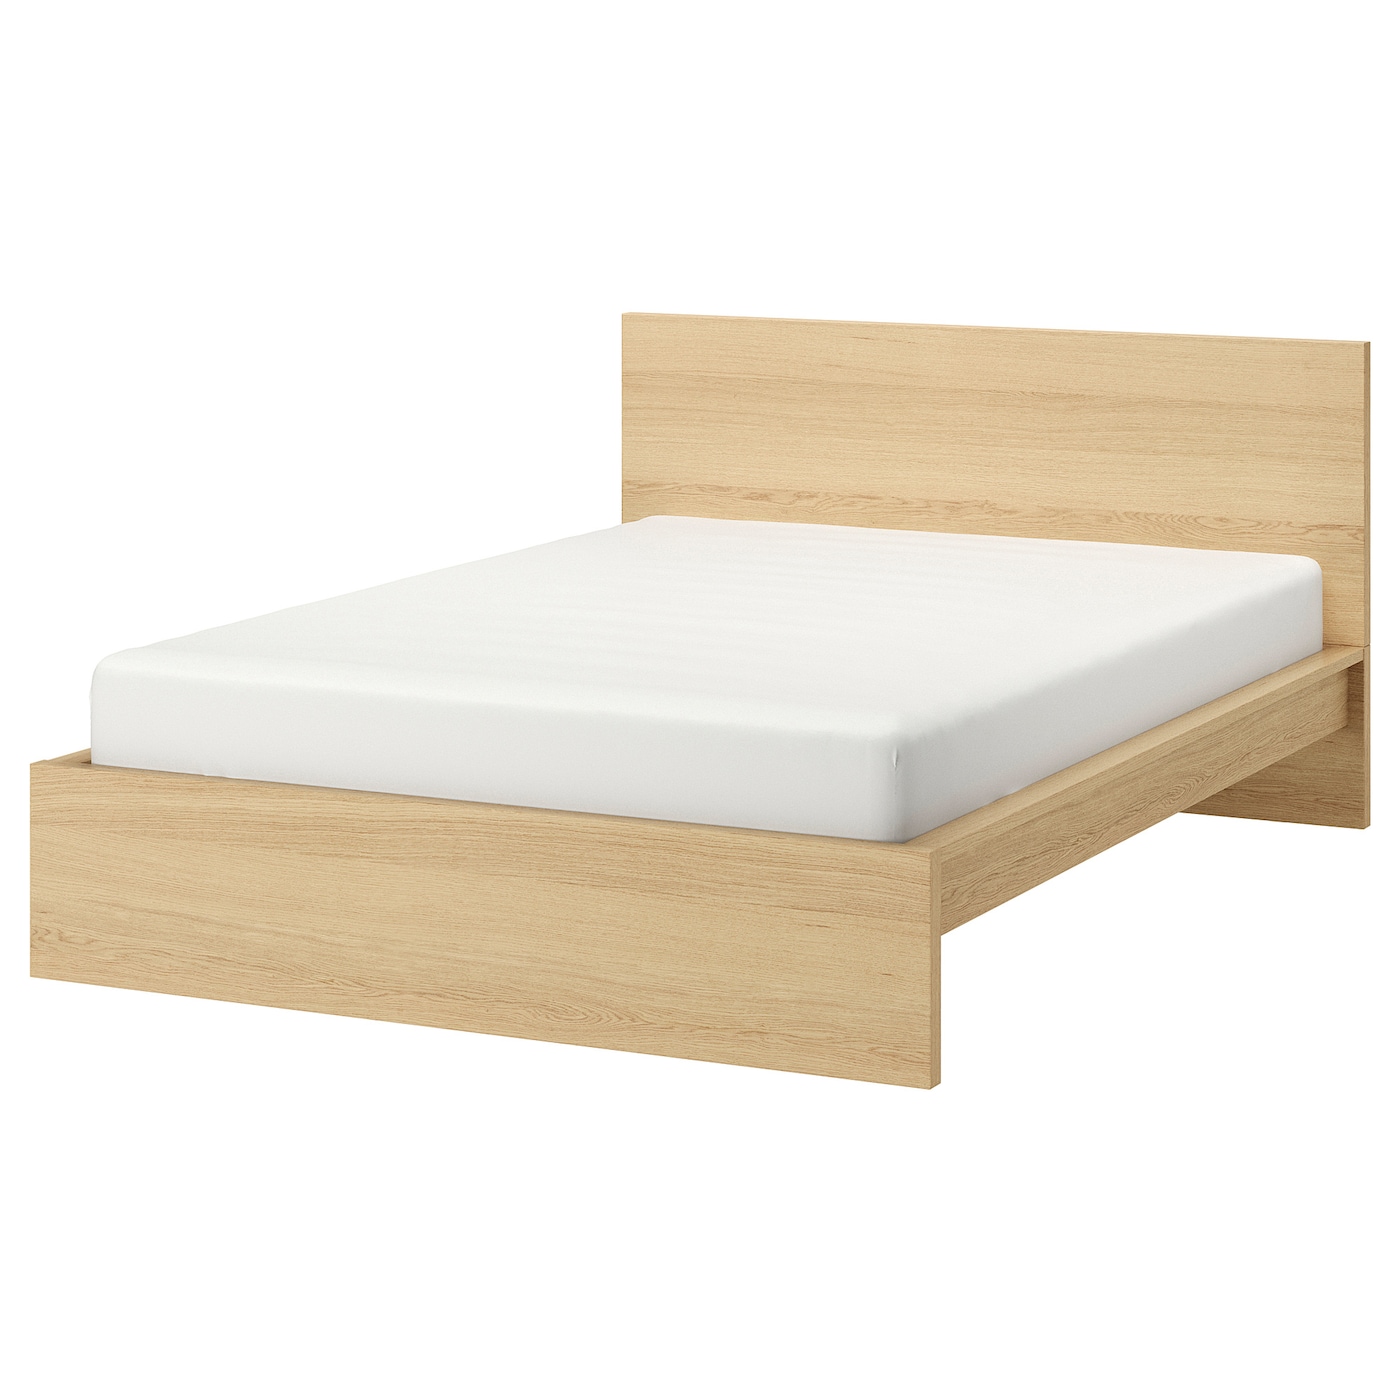 Каркас кровати - IKEA MALM, 200х140 см, под беленый дуб, МАЛЬМ ИКЕА